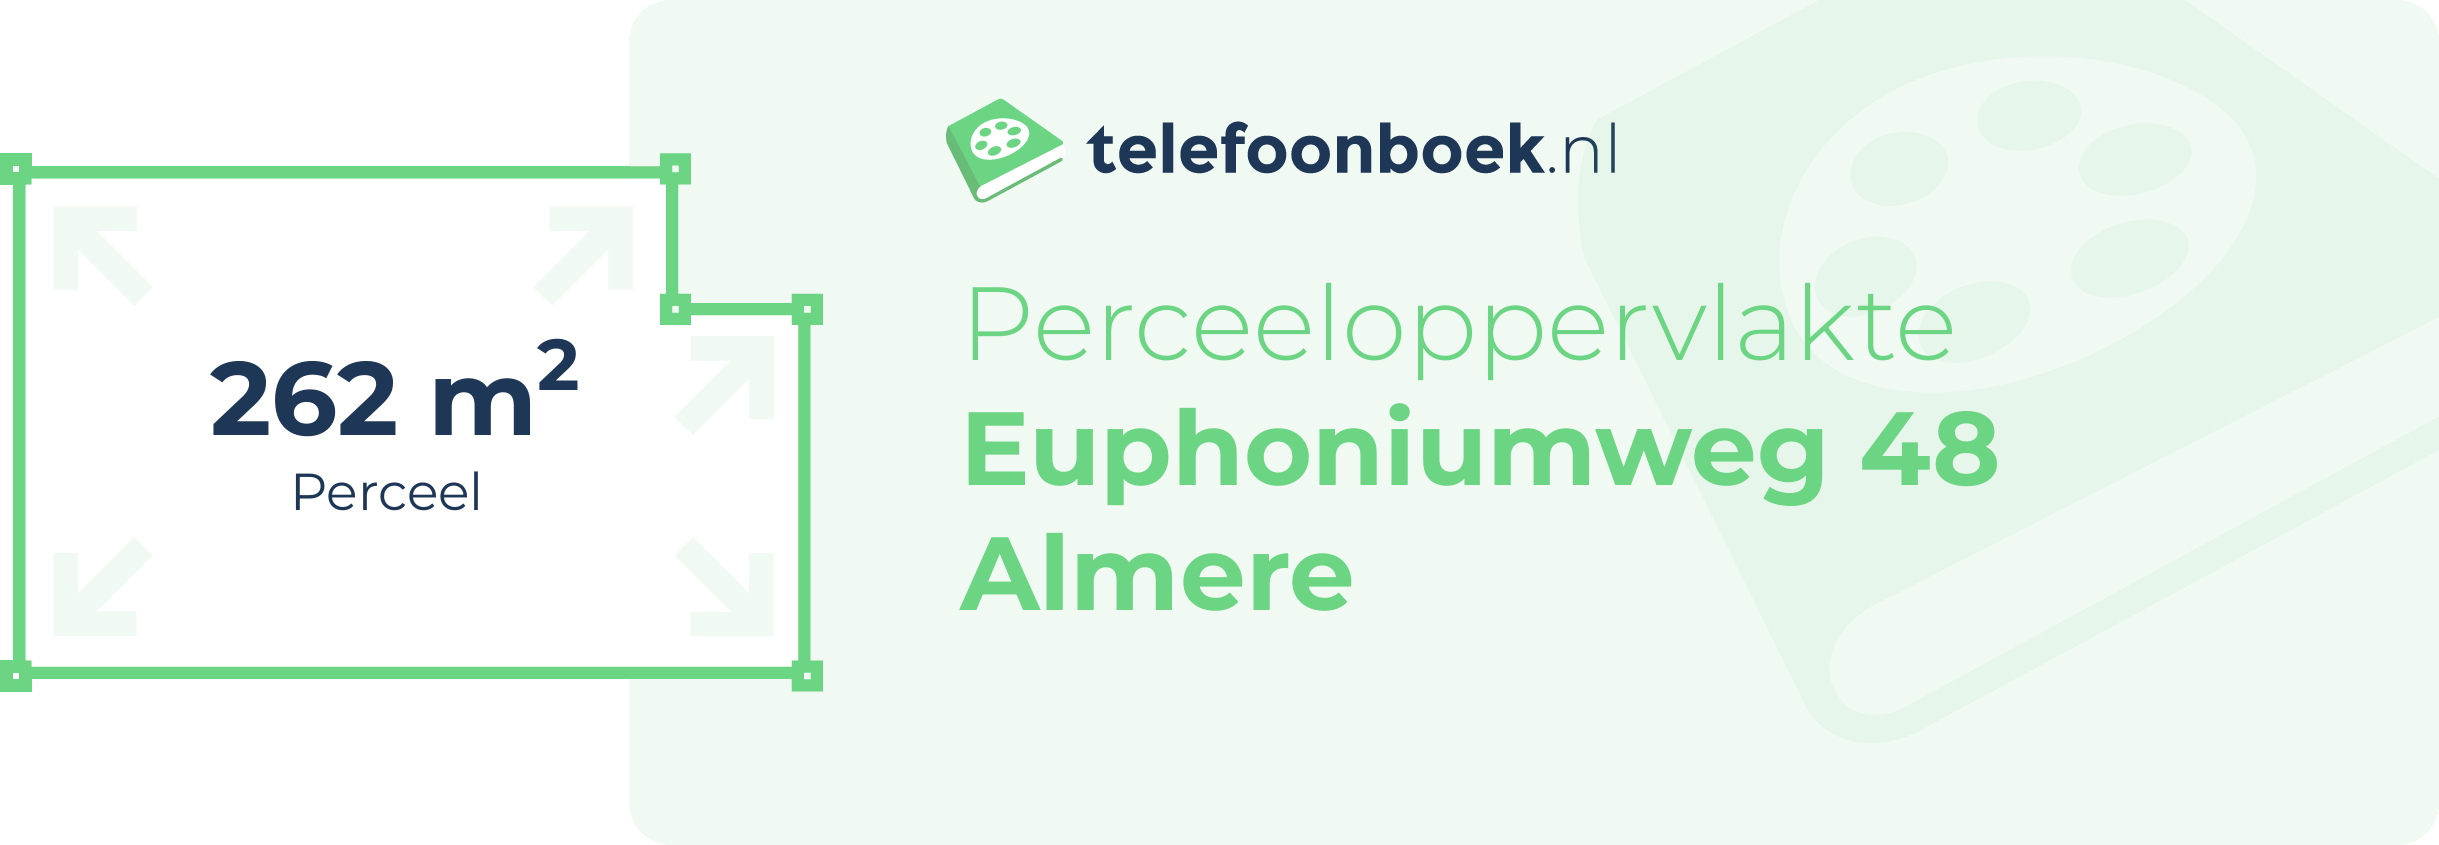 Perceeloppervlakte Euphoniumweg 48 Almere